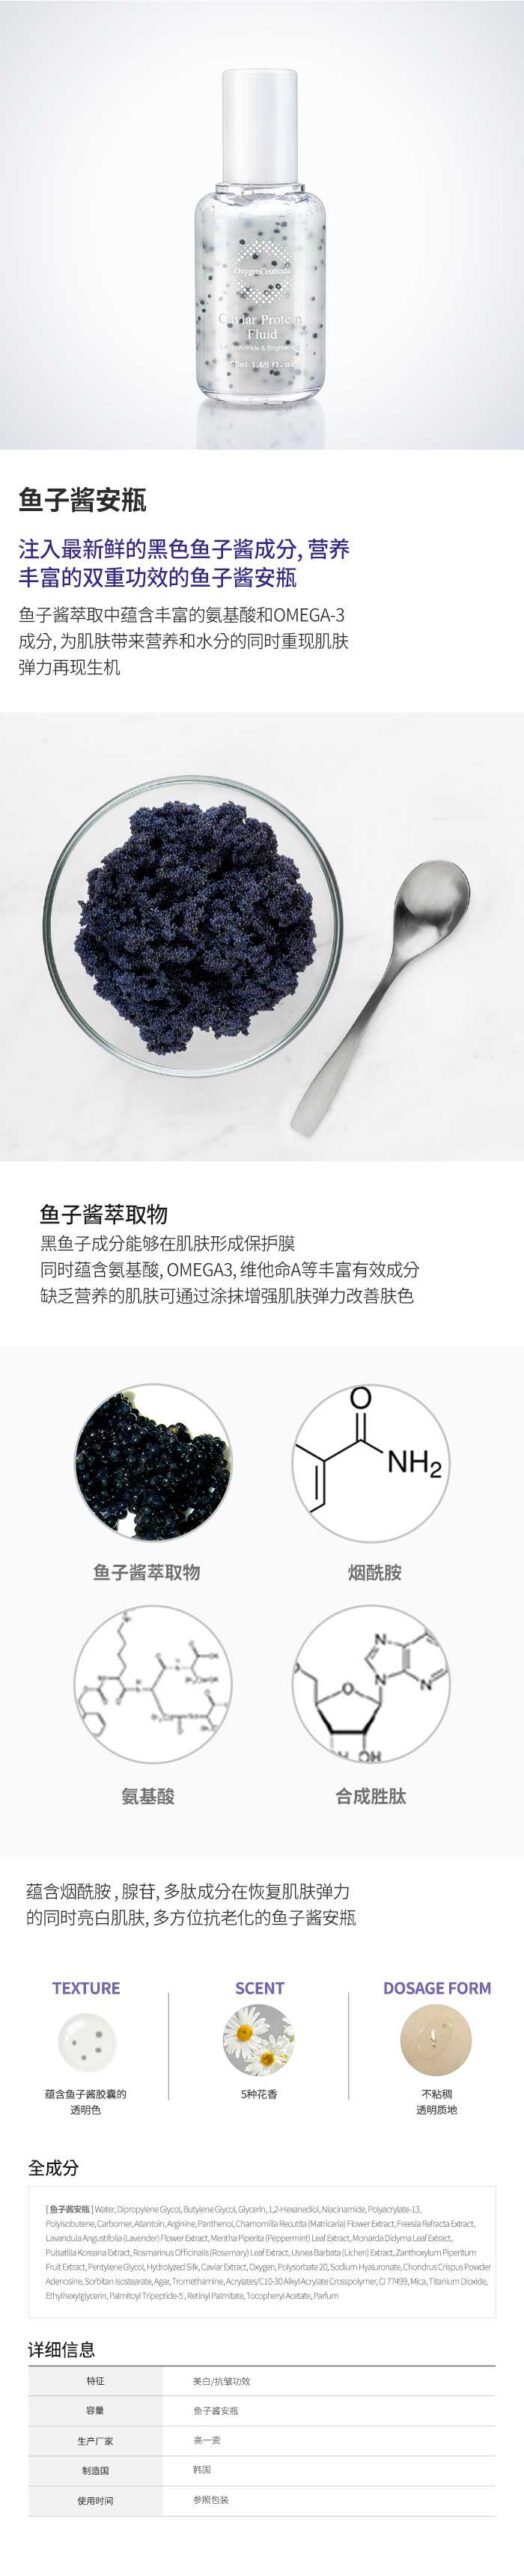 ampoule liquide de protéine de caviar : -2